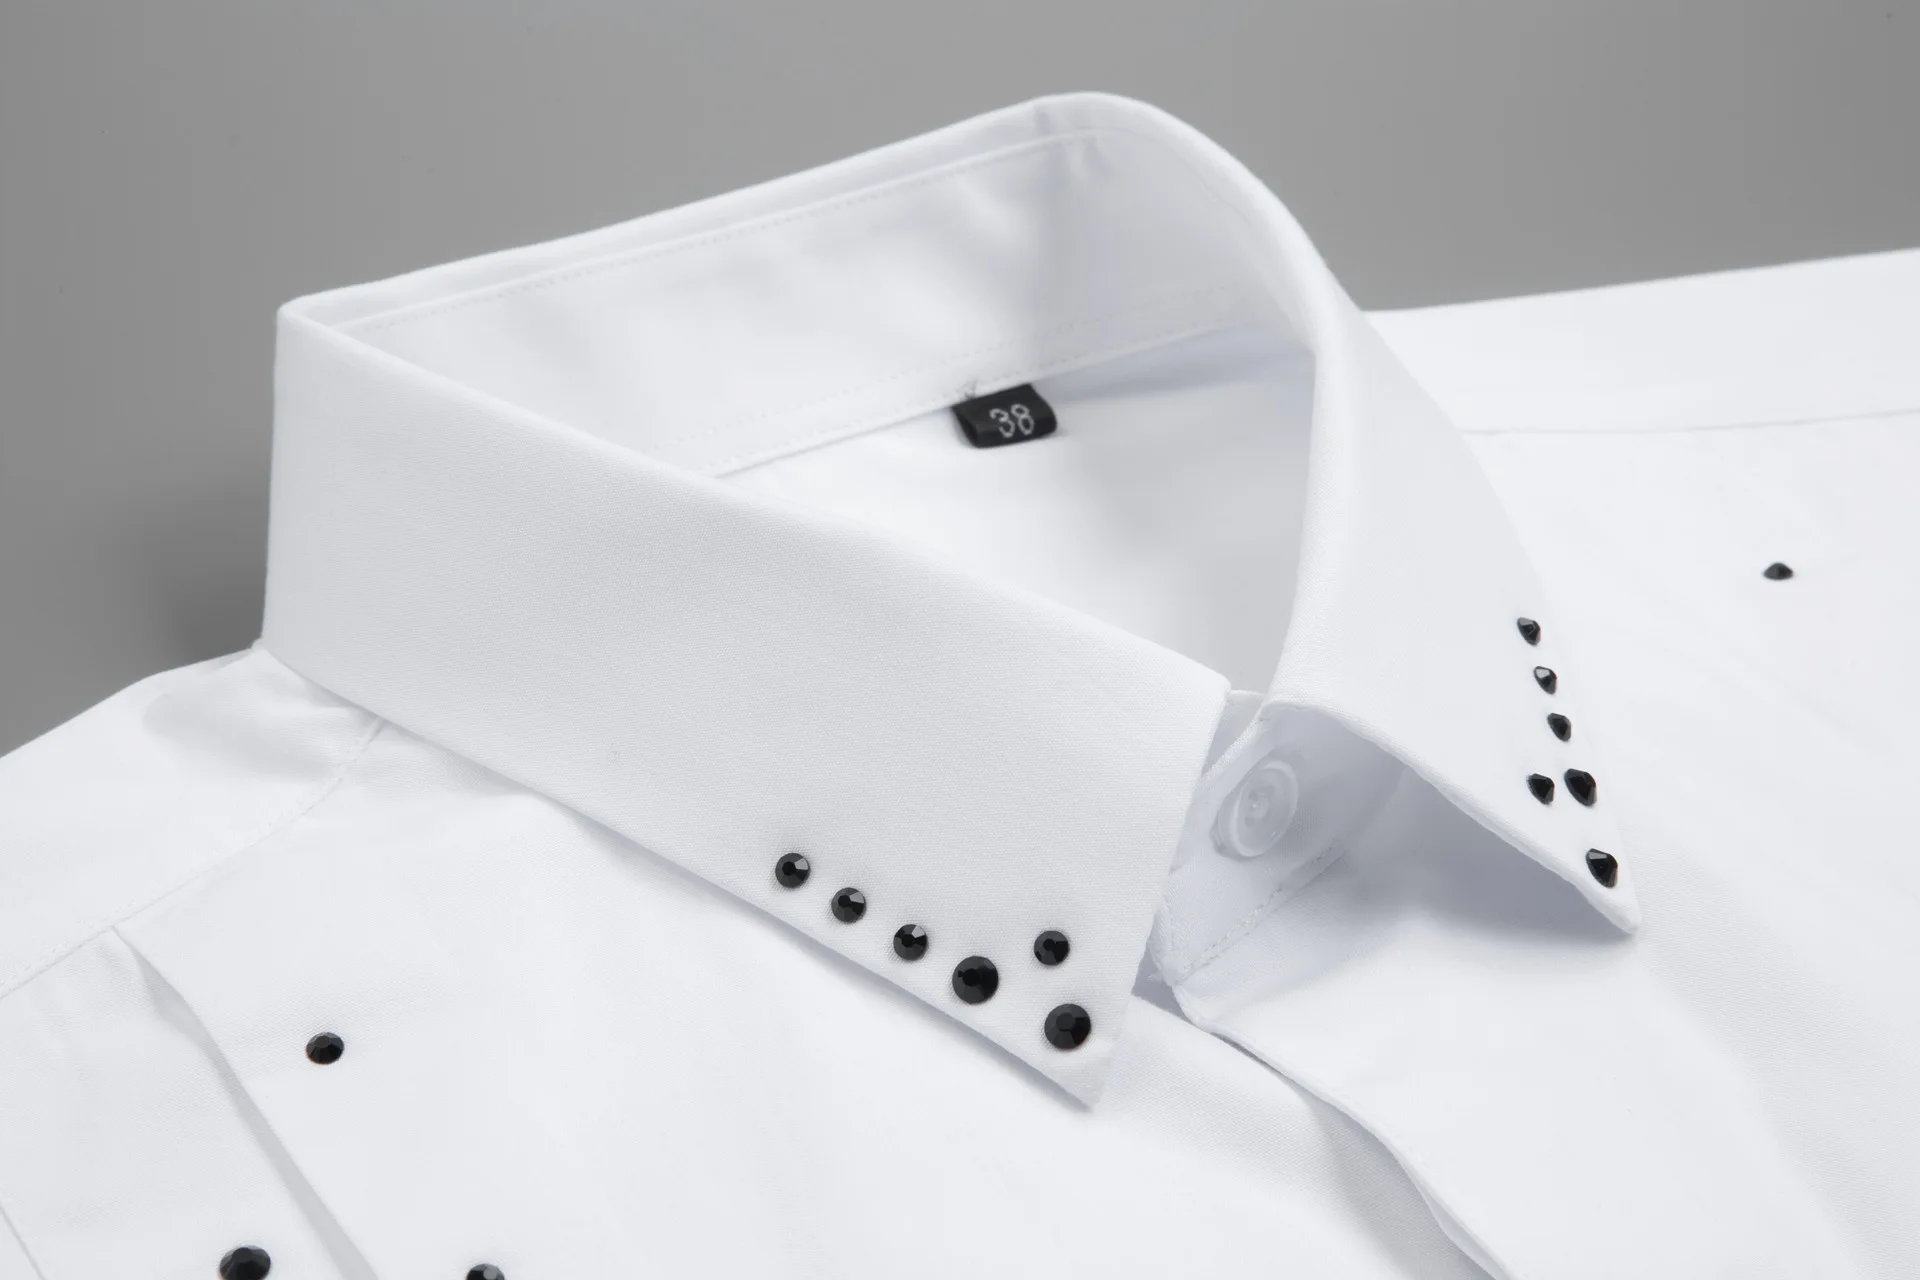 fashion brand personalized front patchwork collar hot drill rhinestone shirt mens long sleeve slim casual white shirt korean men free global shipping